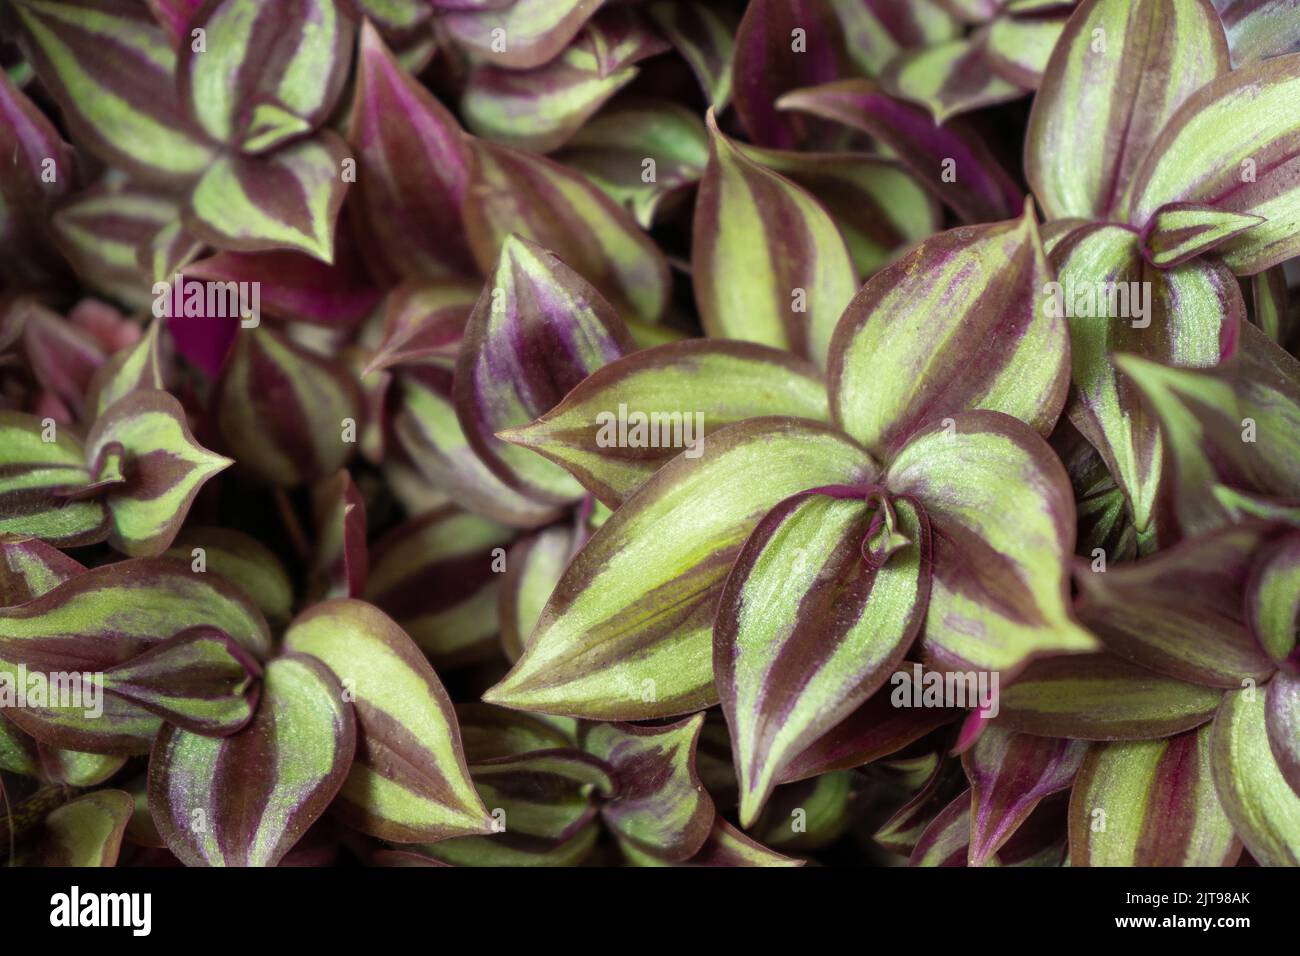 Tradescantia motley multicolor. Home flower with purple leaves. Grade Leonora blossfeldiana zebrina. Stock Photo